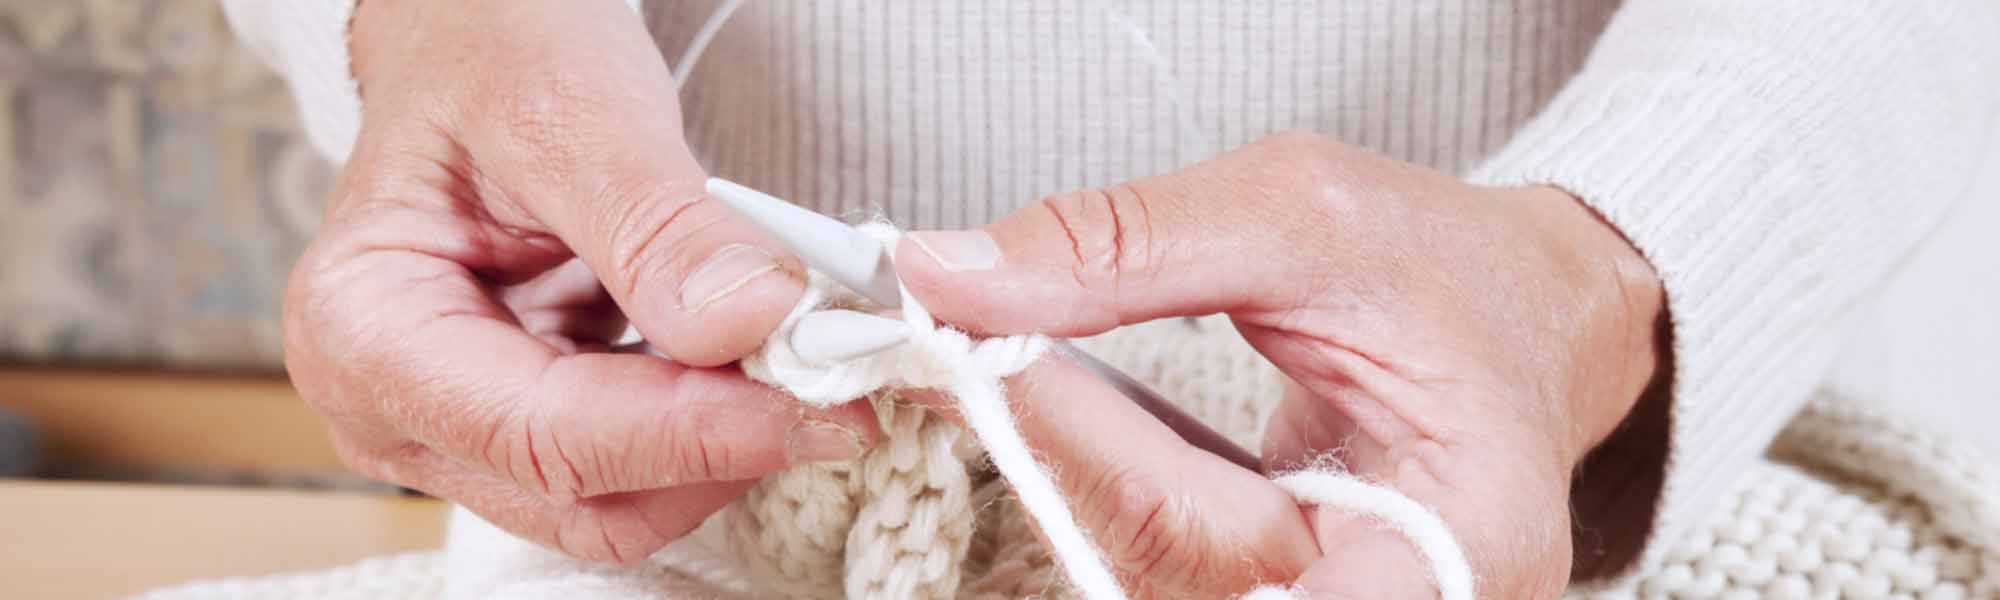 The Best Ergonomic Knitting Needles for Knitters with Arthritis or